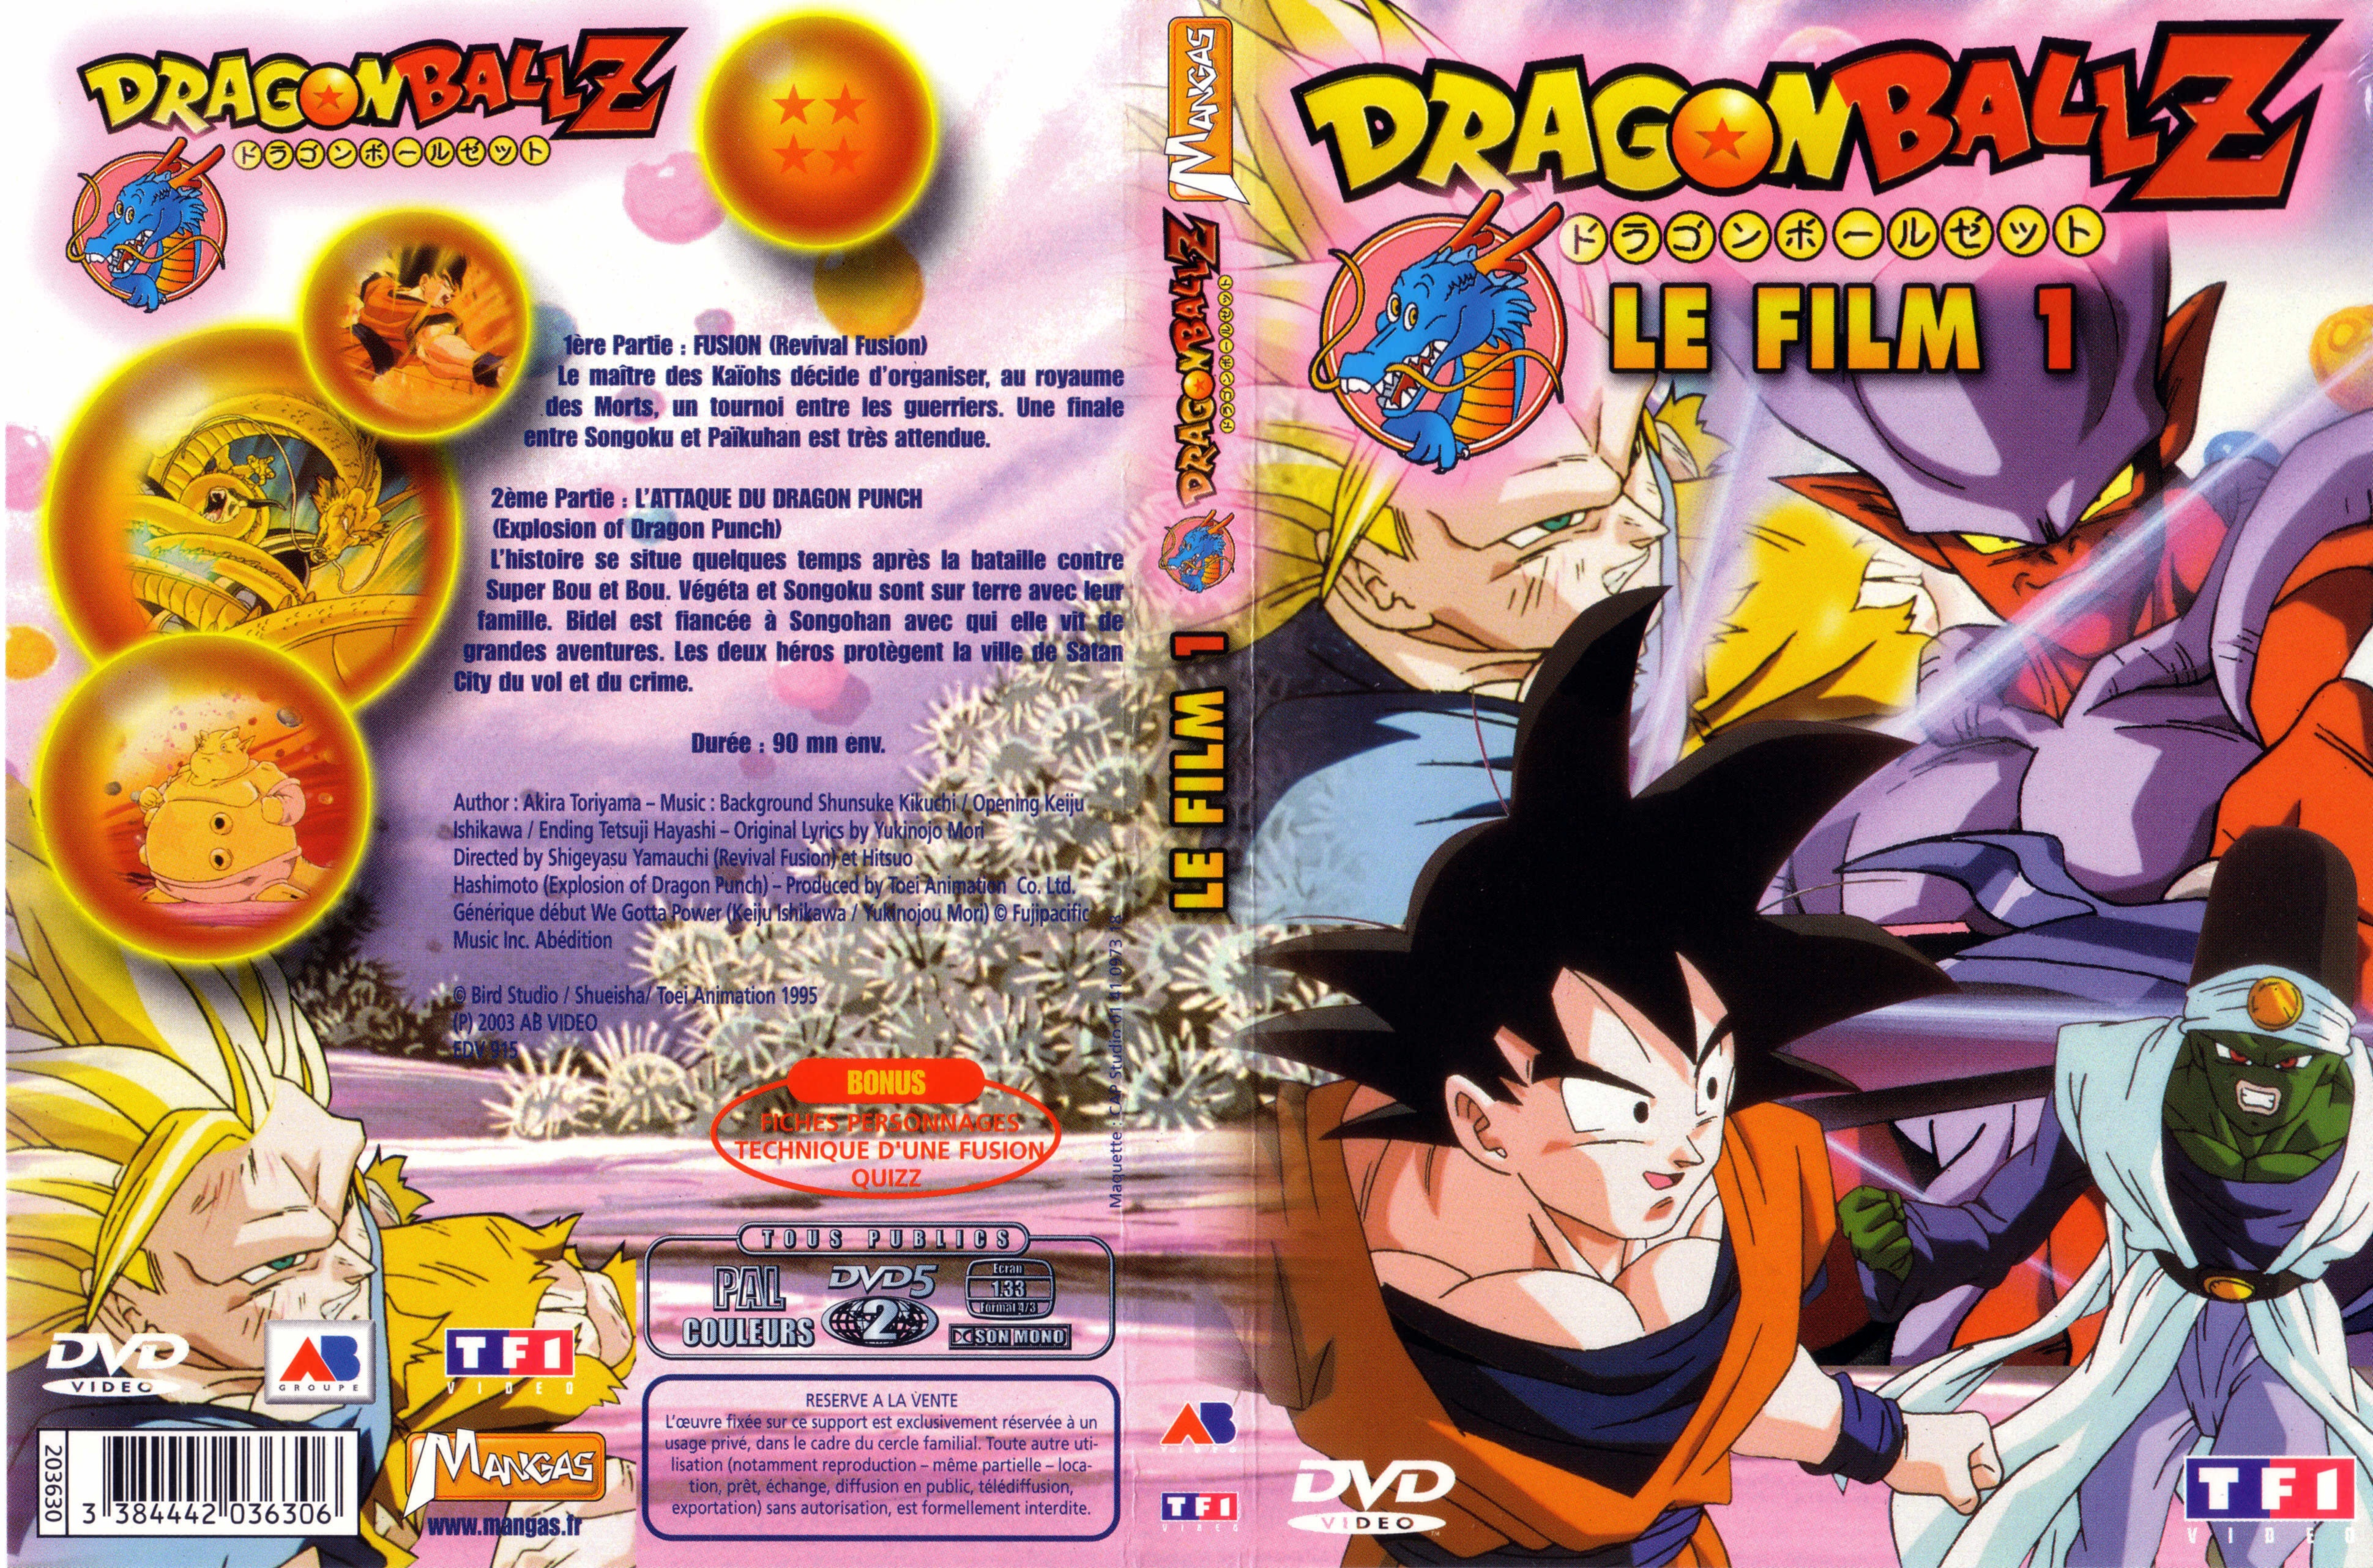 Jaquette DVD Dragon ball Z le film 1